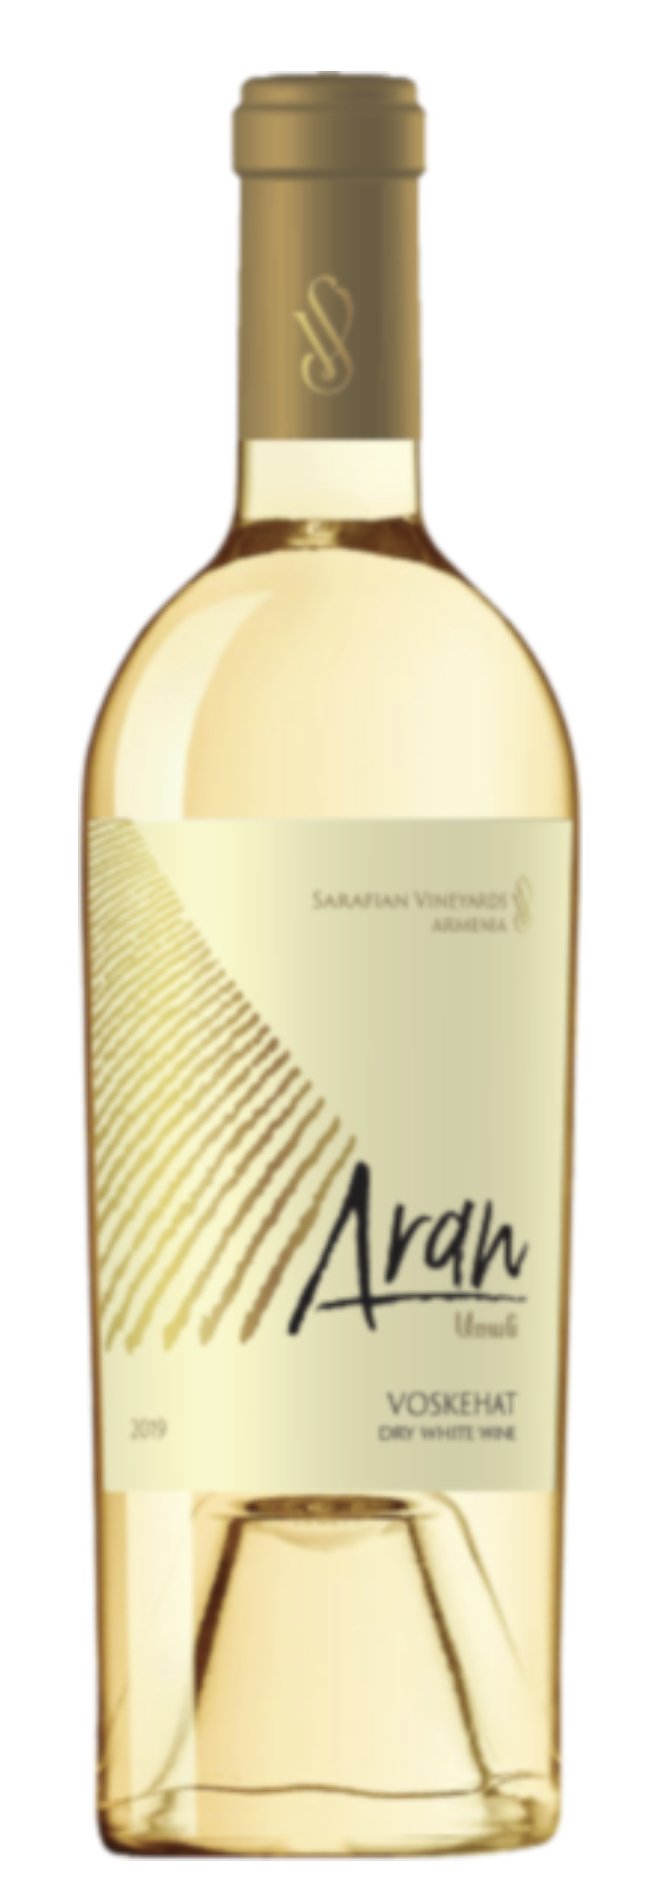 2019 Aran Voskehat Dry White Wine